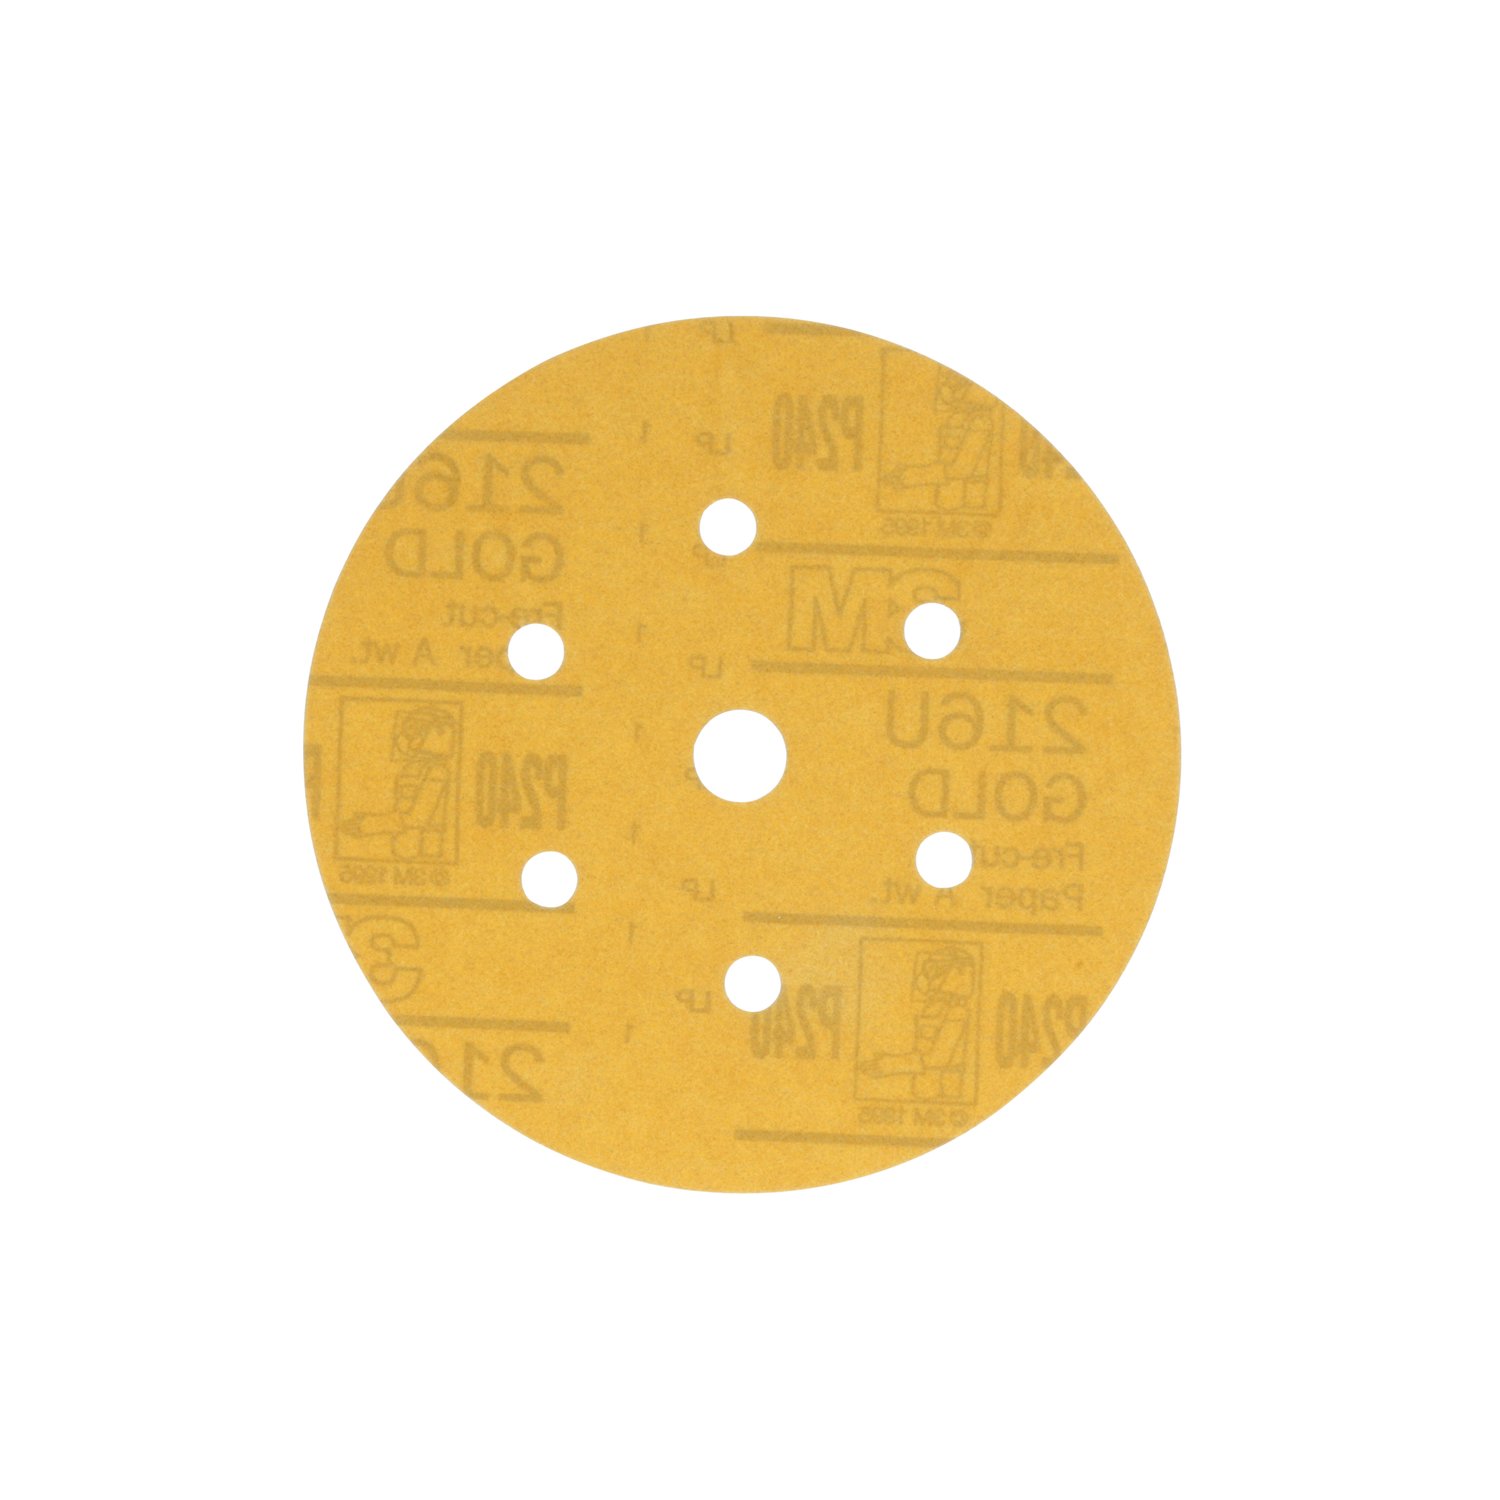 7000119697 - 3M Hookit Gold Disc Dust Free 216U 01077, 6 in, P240, 100 Discs/Carton, 4 Cartons/Case